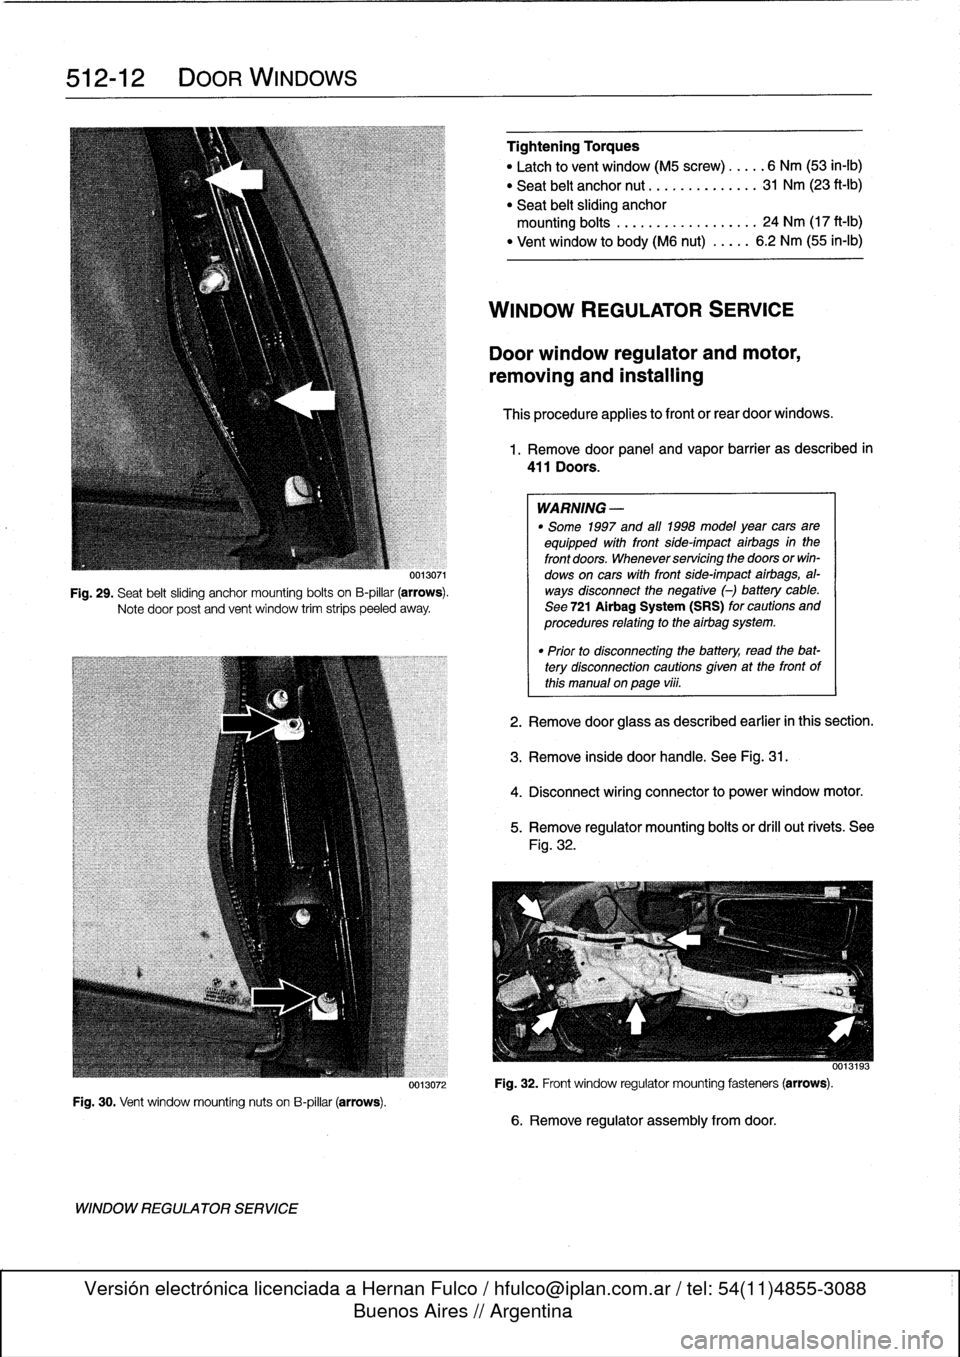 BMW 325i 1994 E36 Owners Manual 
512-
1
2

	

DOOR
WINDOWS

Fig
.
30
.
Vent
window
mounting
nuts
on
B-pillar
(arrows)
.

WINDOW
REGULATOR
SERVICE

0013071

Fig
.
29
.
Seat
belt
sliding
anchor
mounting
bolts
on
B-pillar
(arrows)
.

N